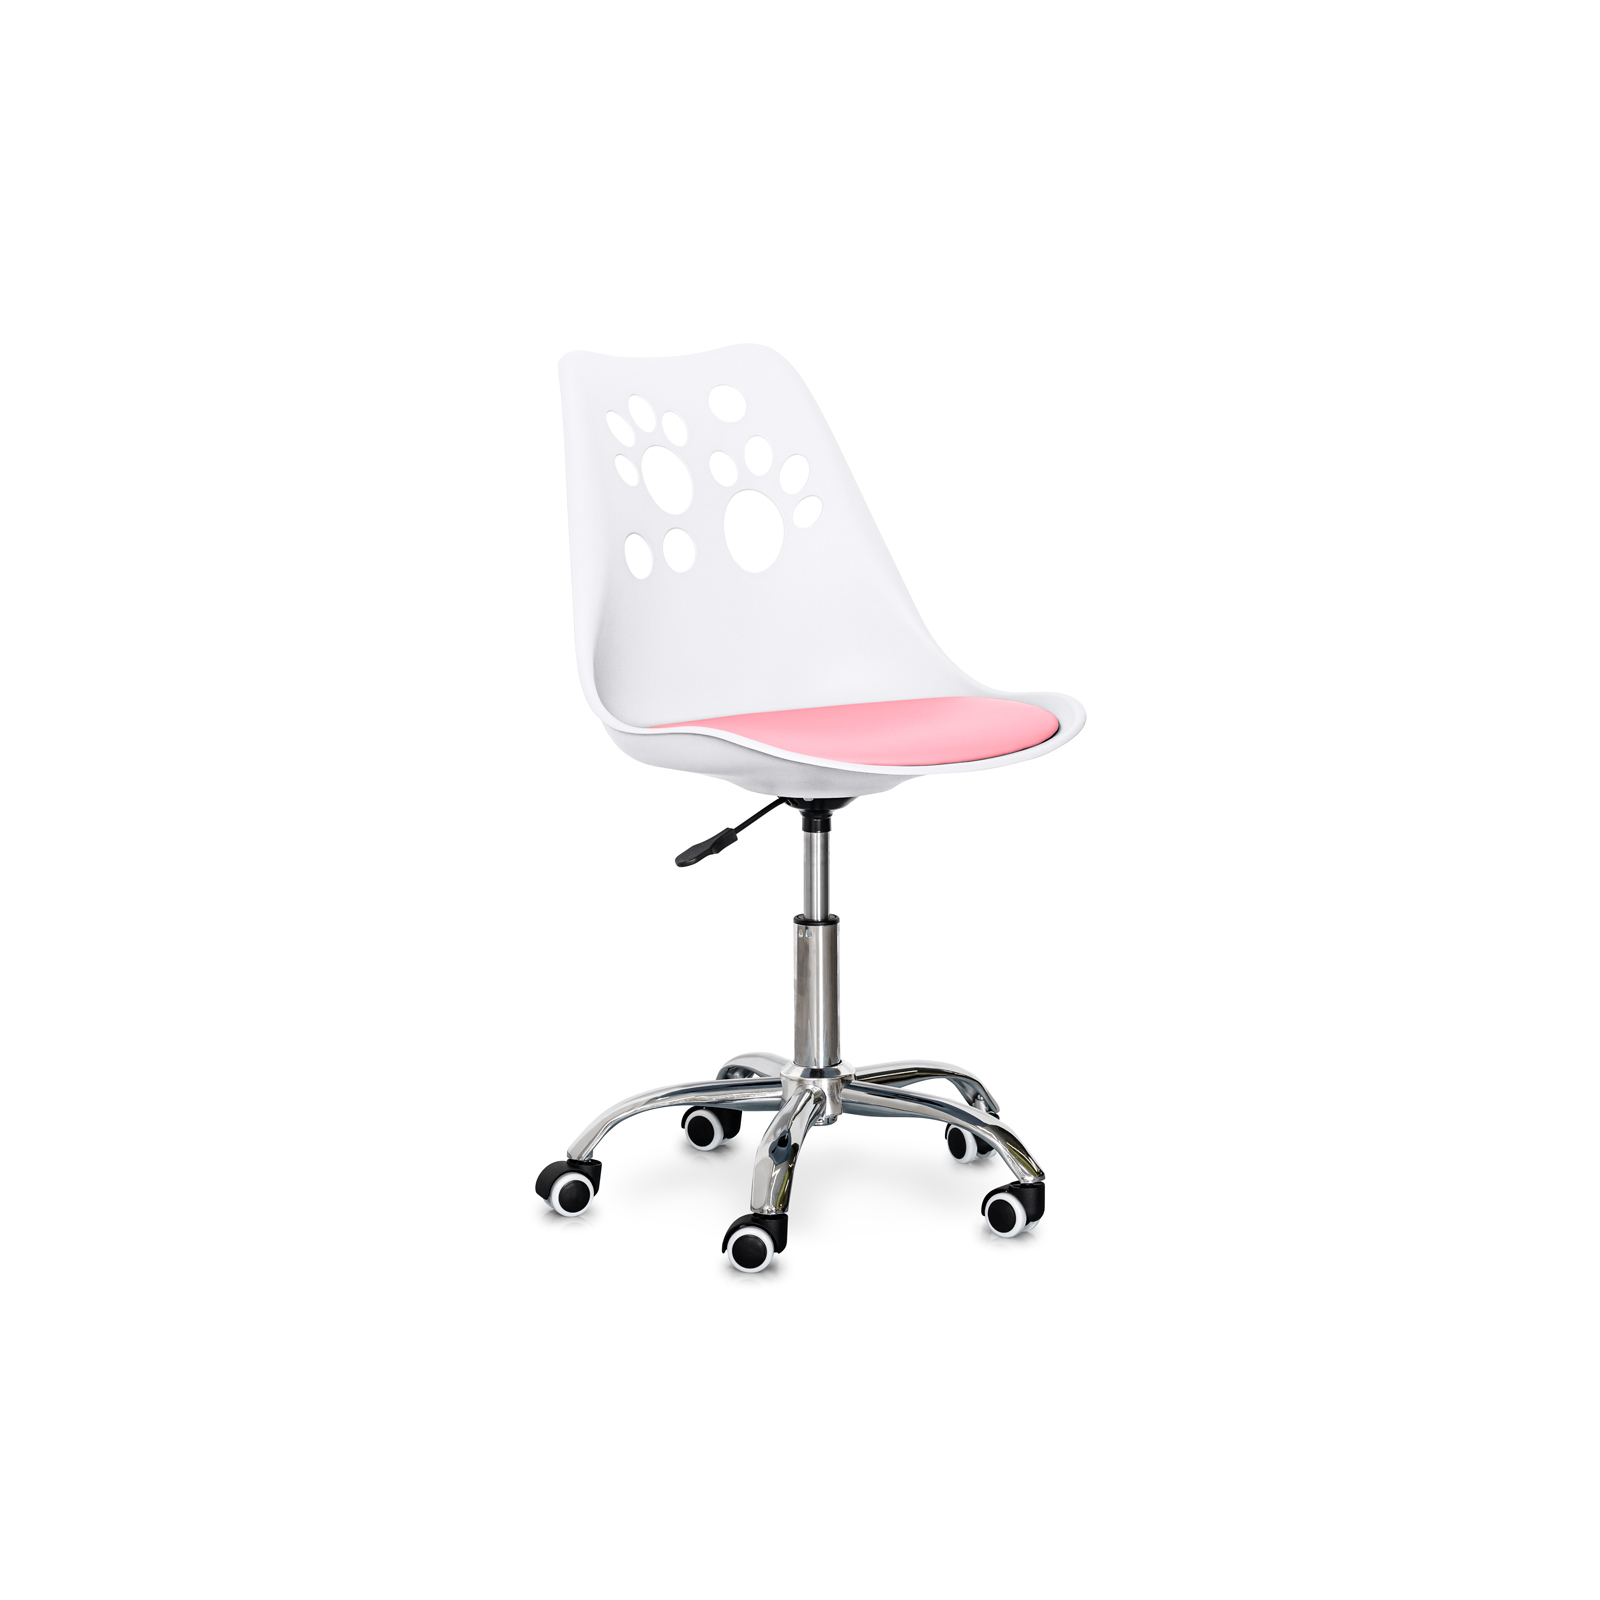 Детское кресло Evo-kids Indigo White / Pink (H-232 W/PN)